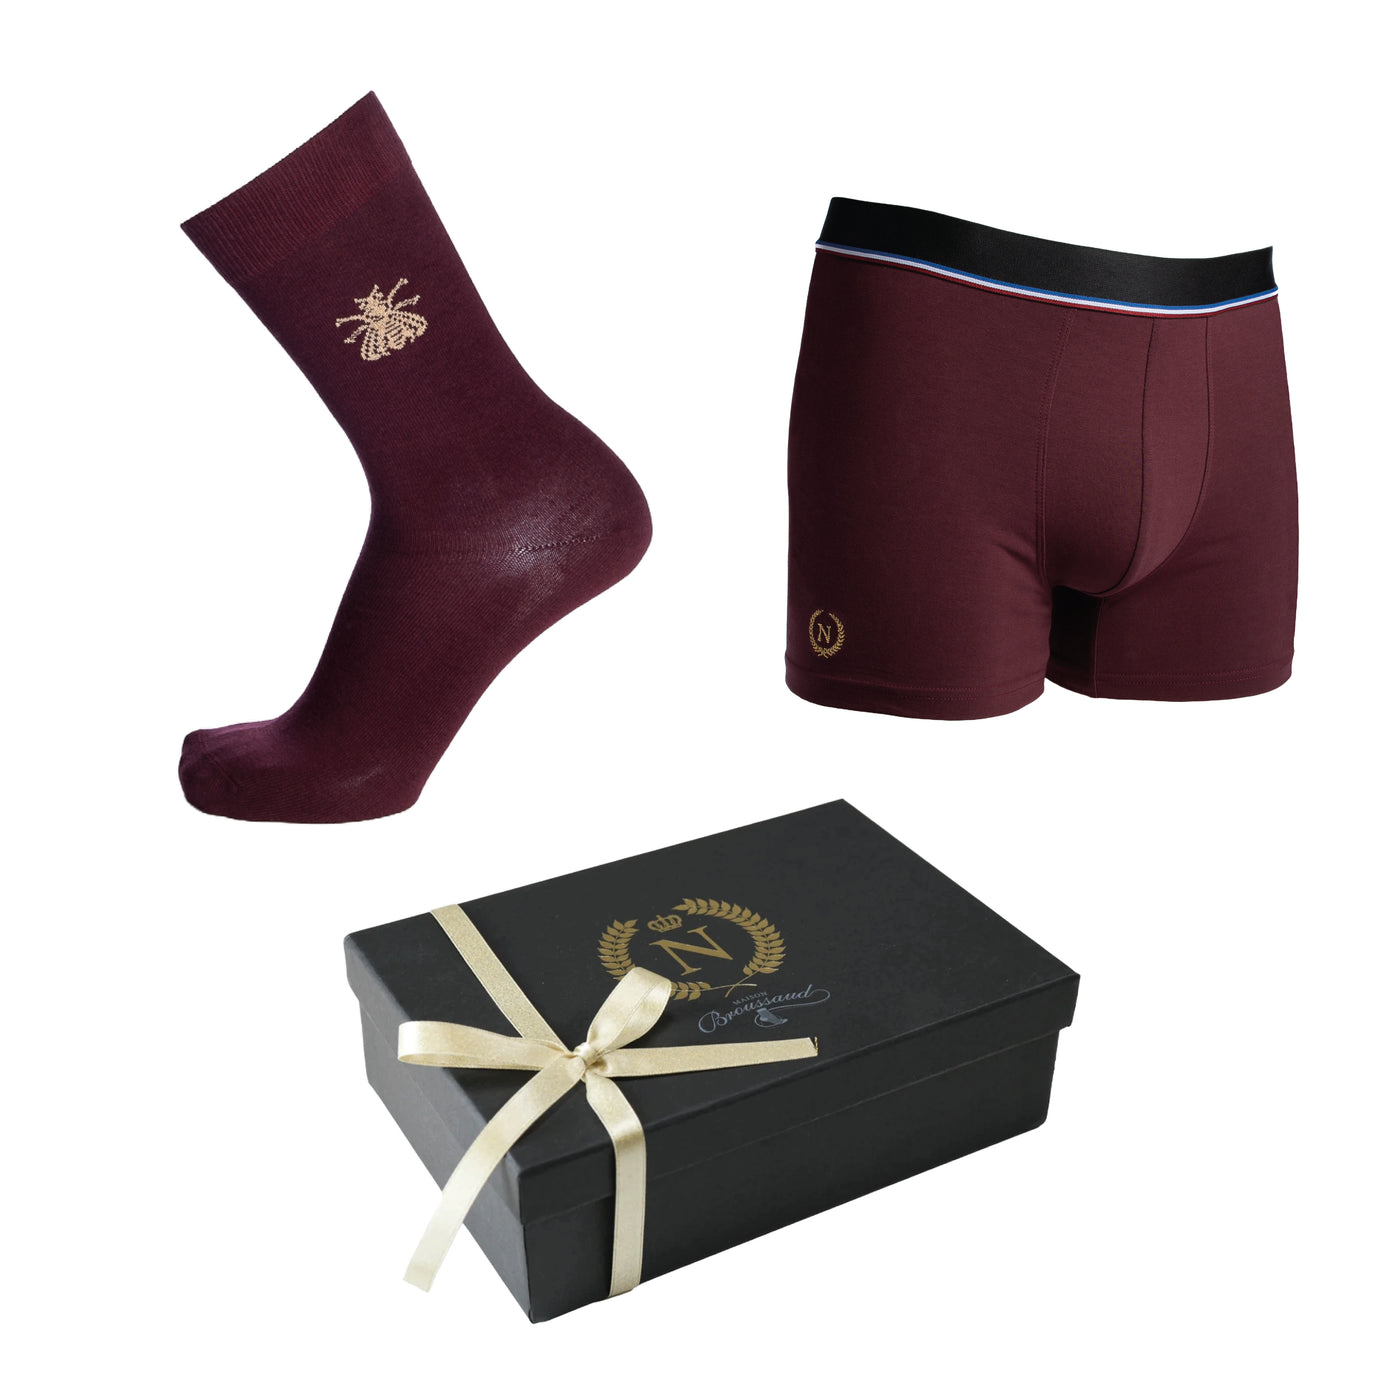 Napoleon box "The Bee" - burgundy boxers and socks